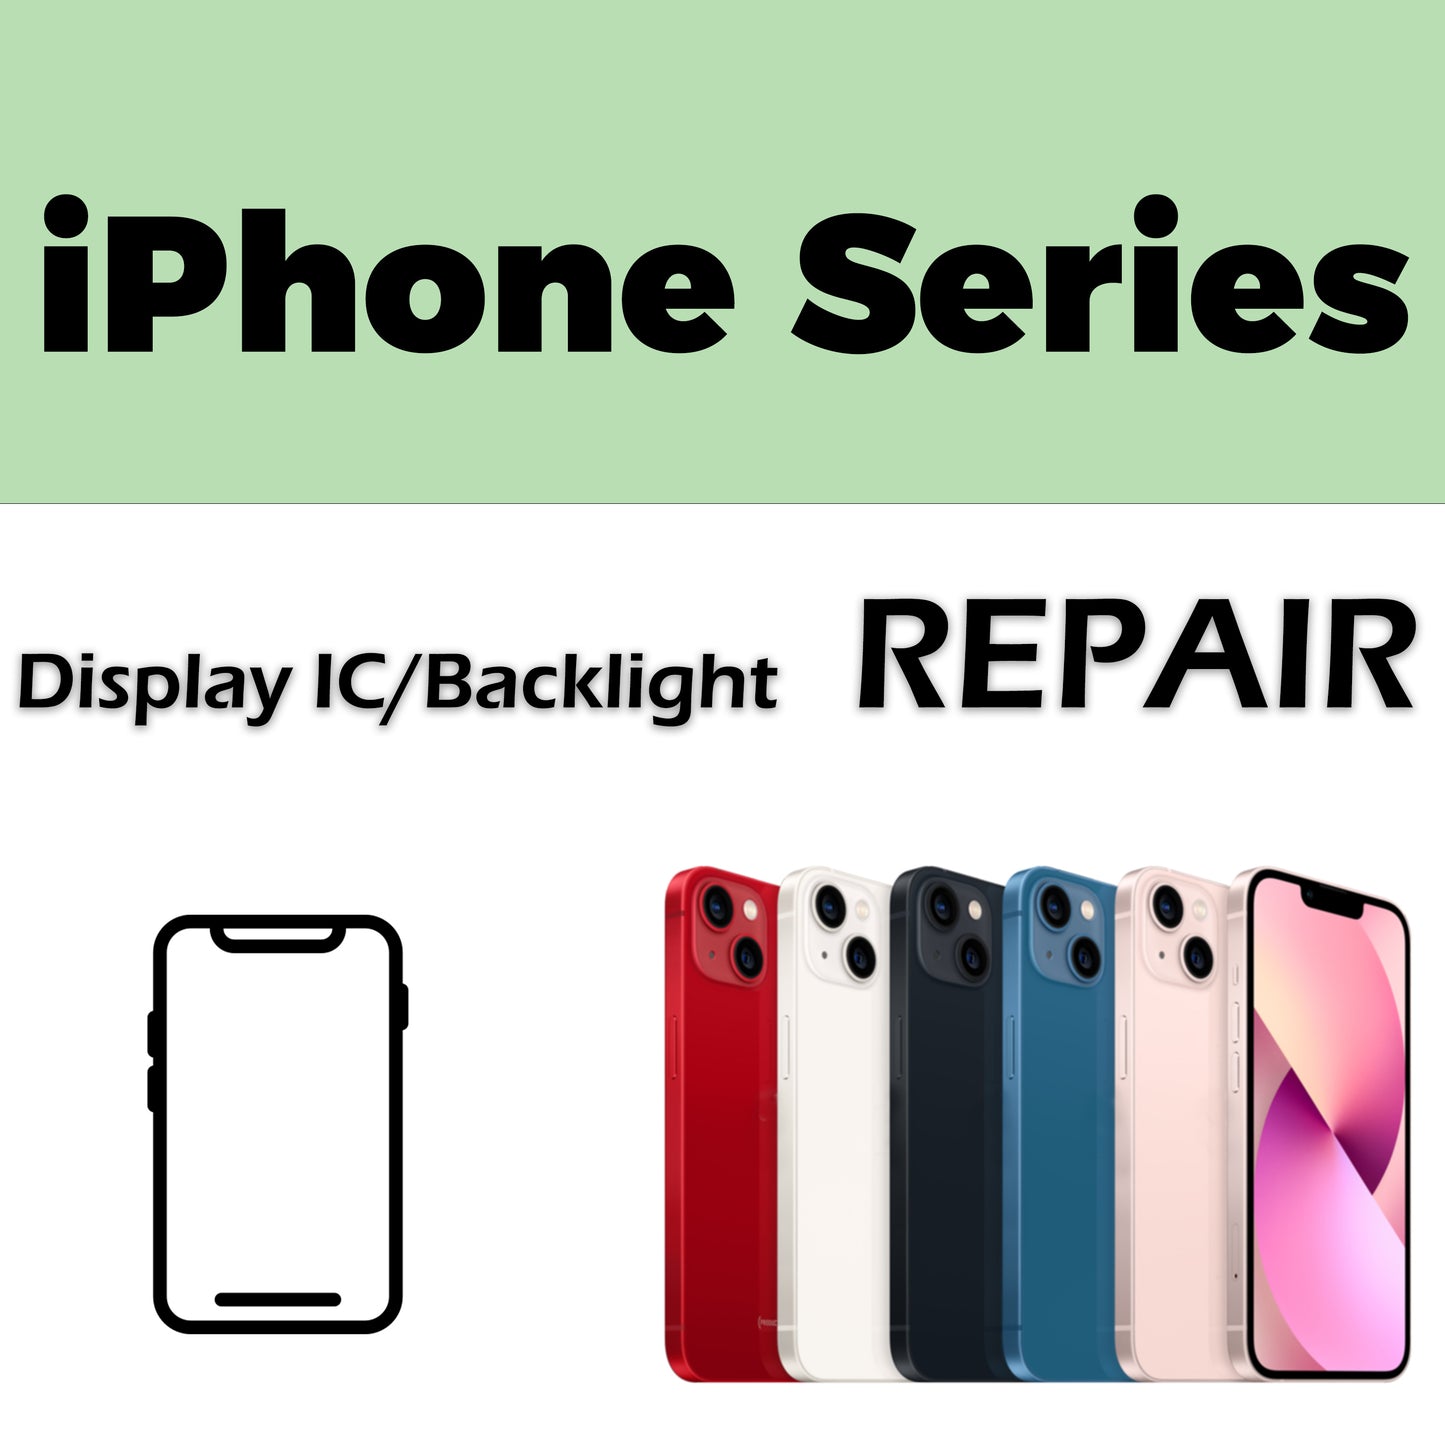 iPhone Series Display Ic Backlight Repair Service